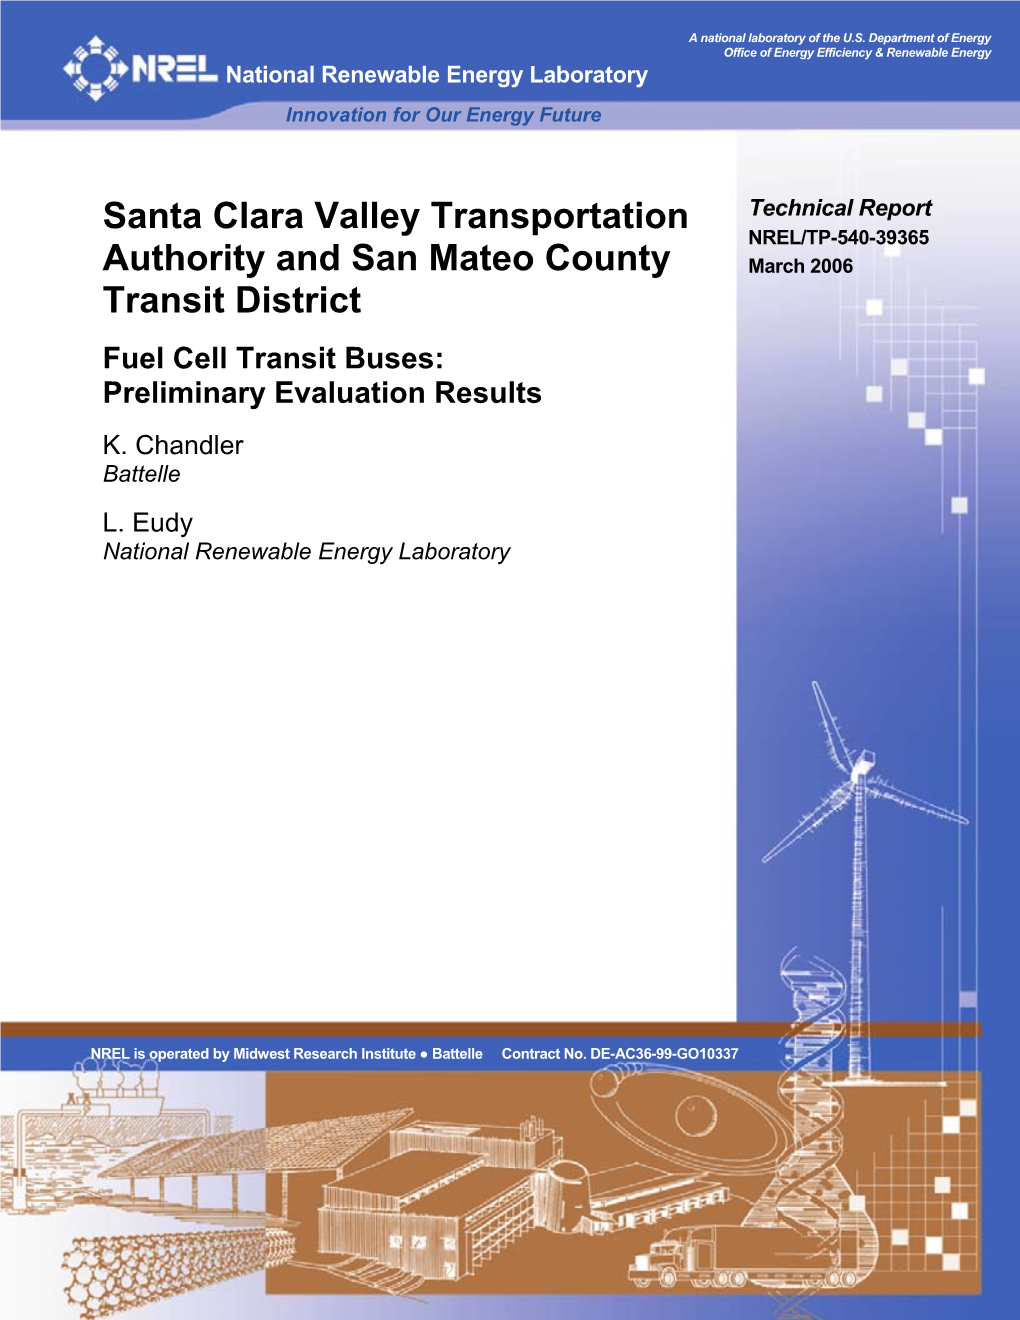 Santa Clara Valley Transportation Authority and San Mateo County Transit District